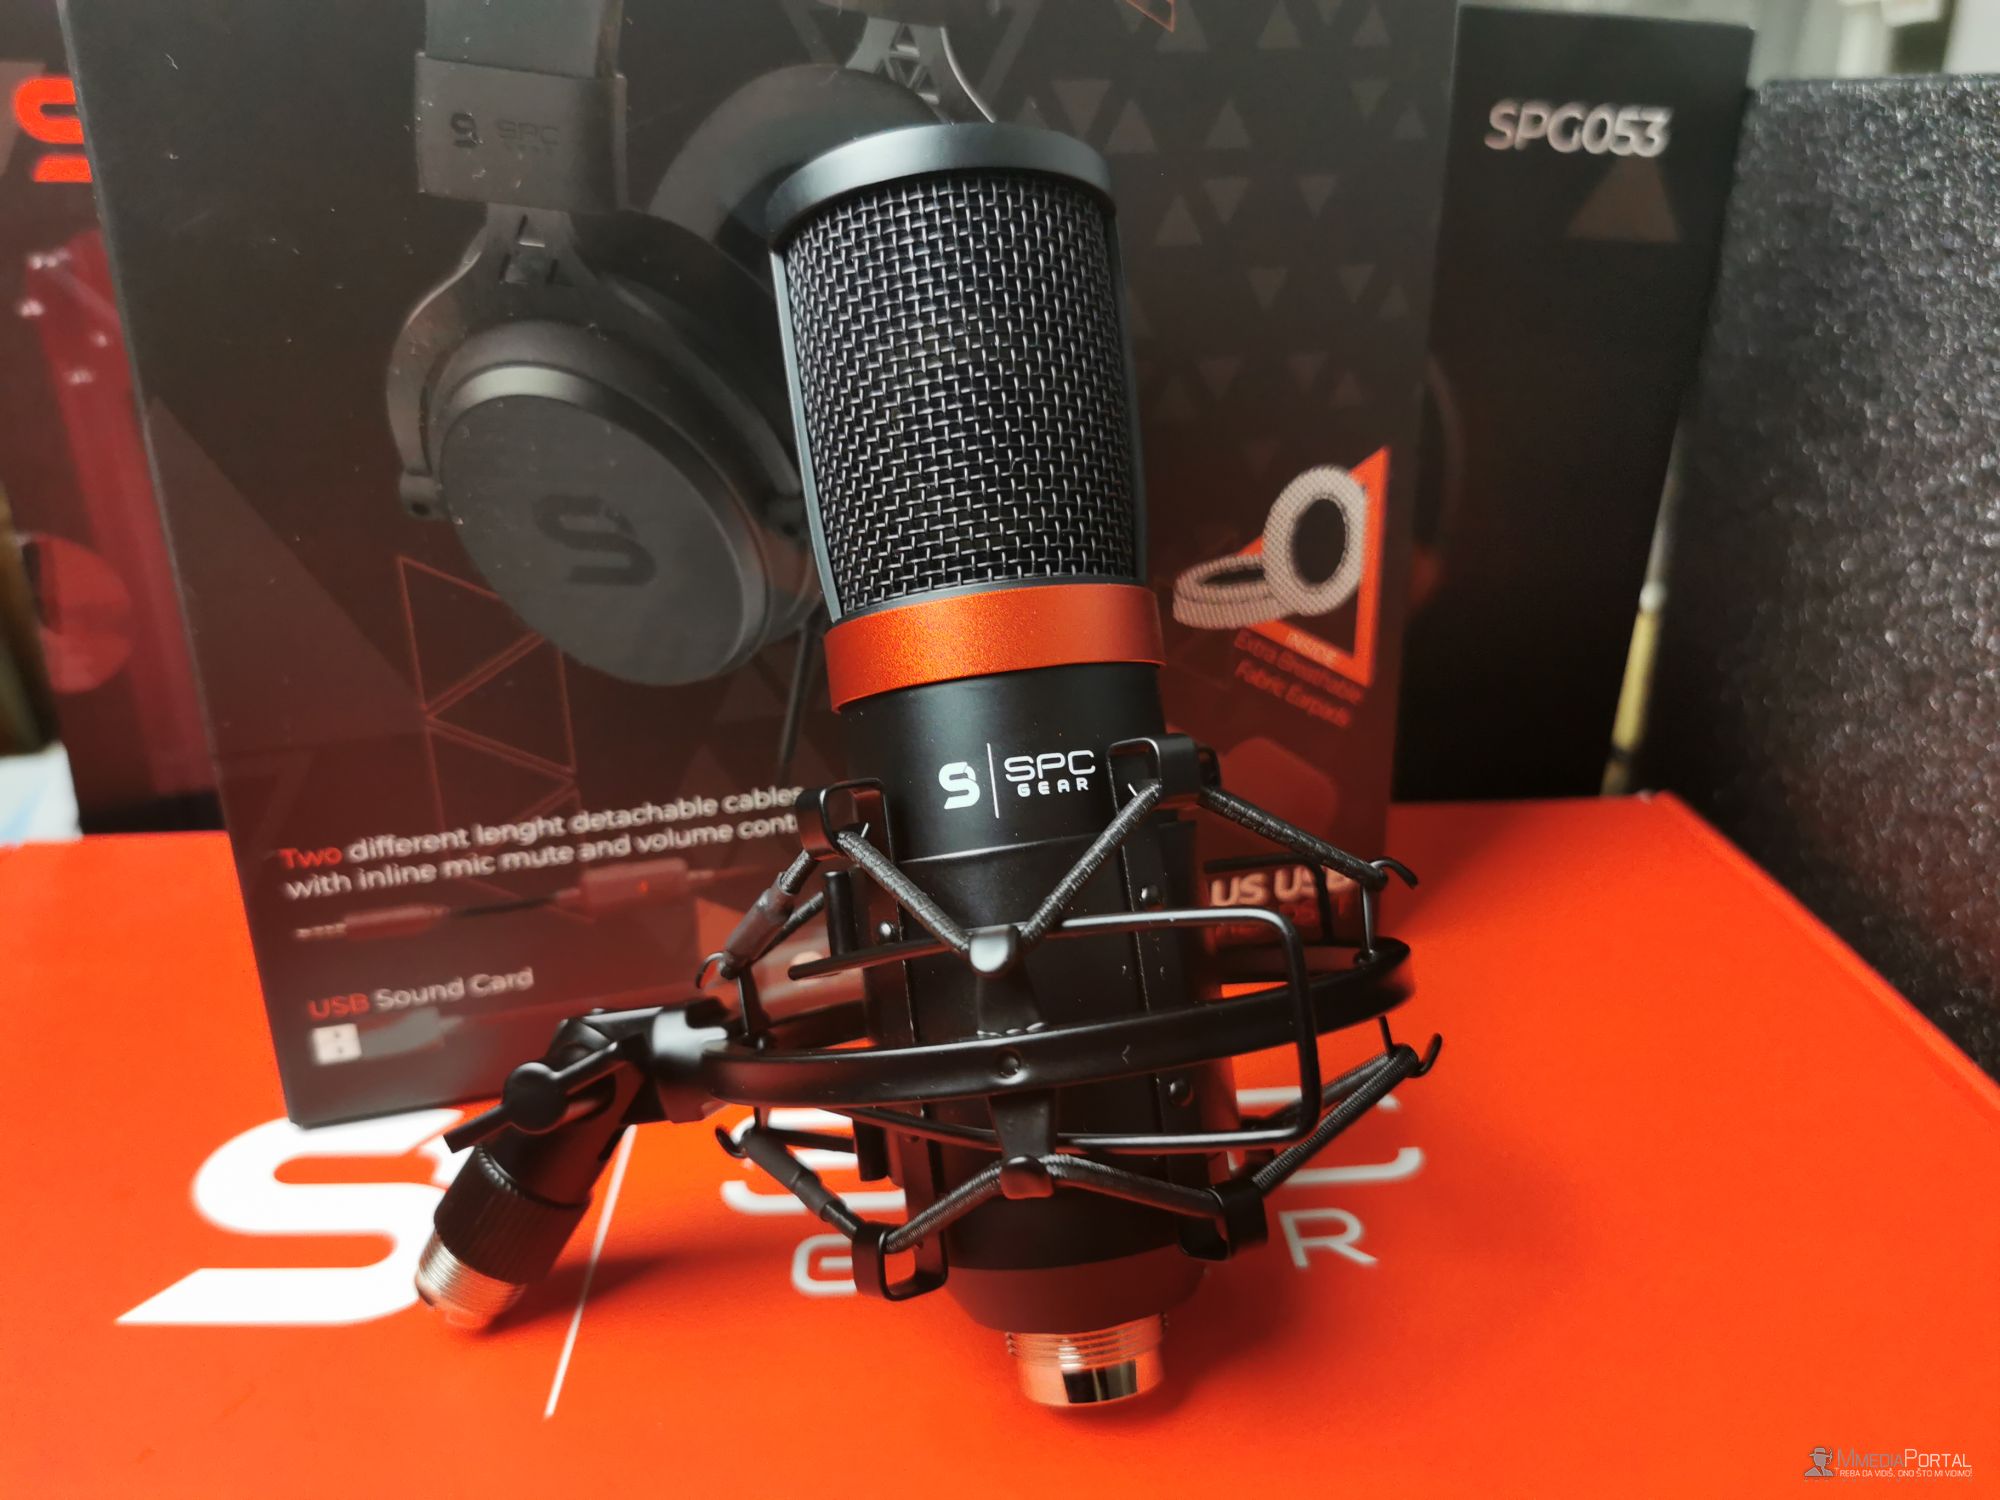 RECENZIJA: SPC Gear SM950 MIKROFON - Jedan od najboljih mikrofona za YouTubere i Streamere (VIDEO)